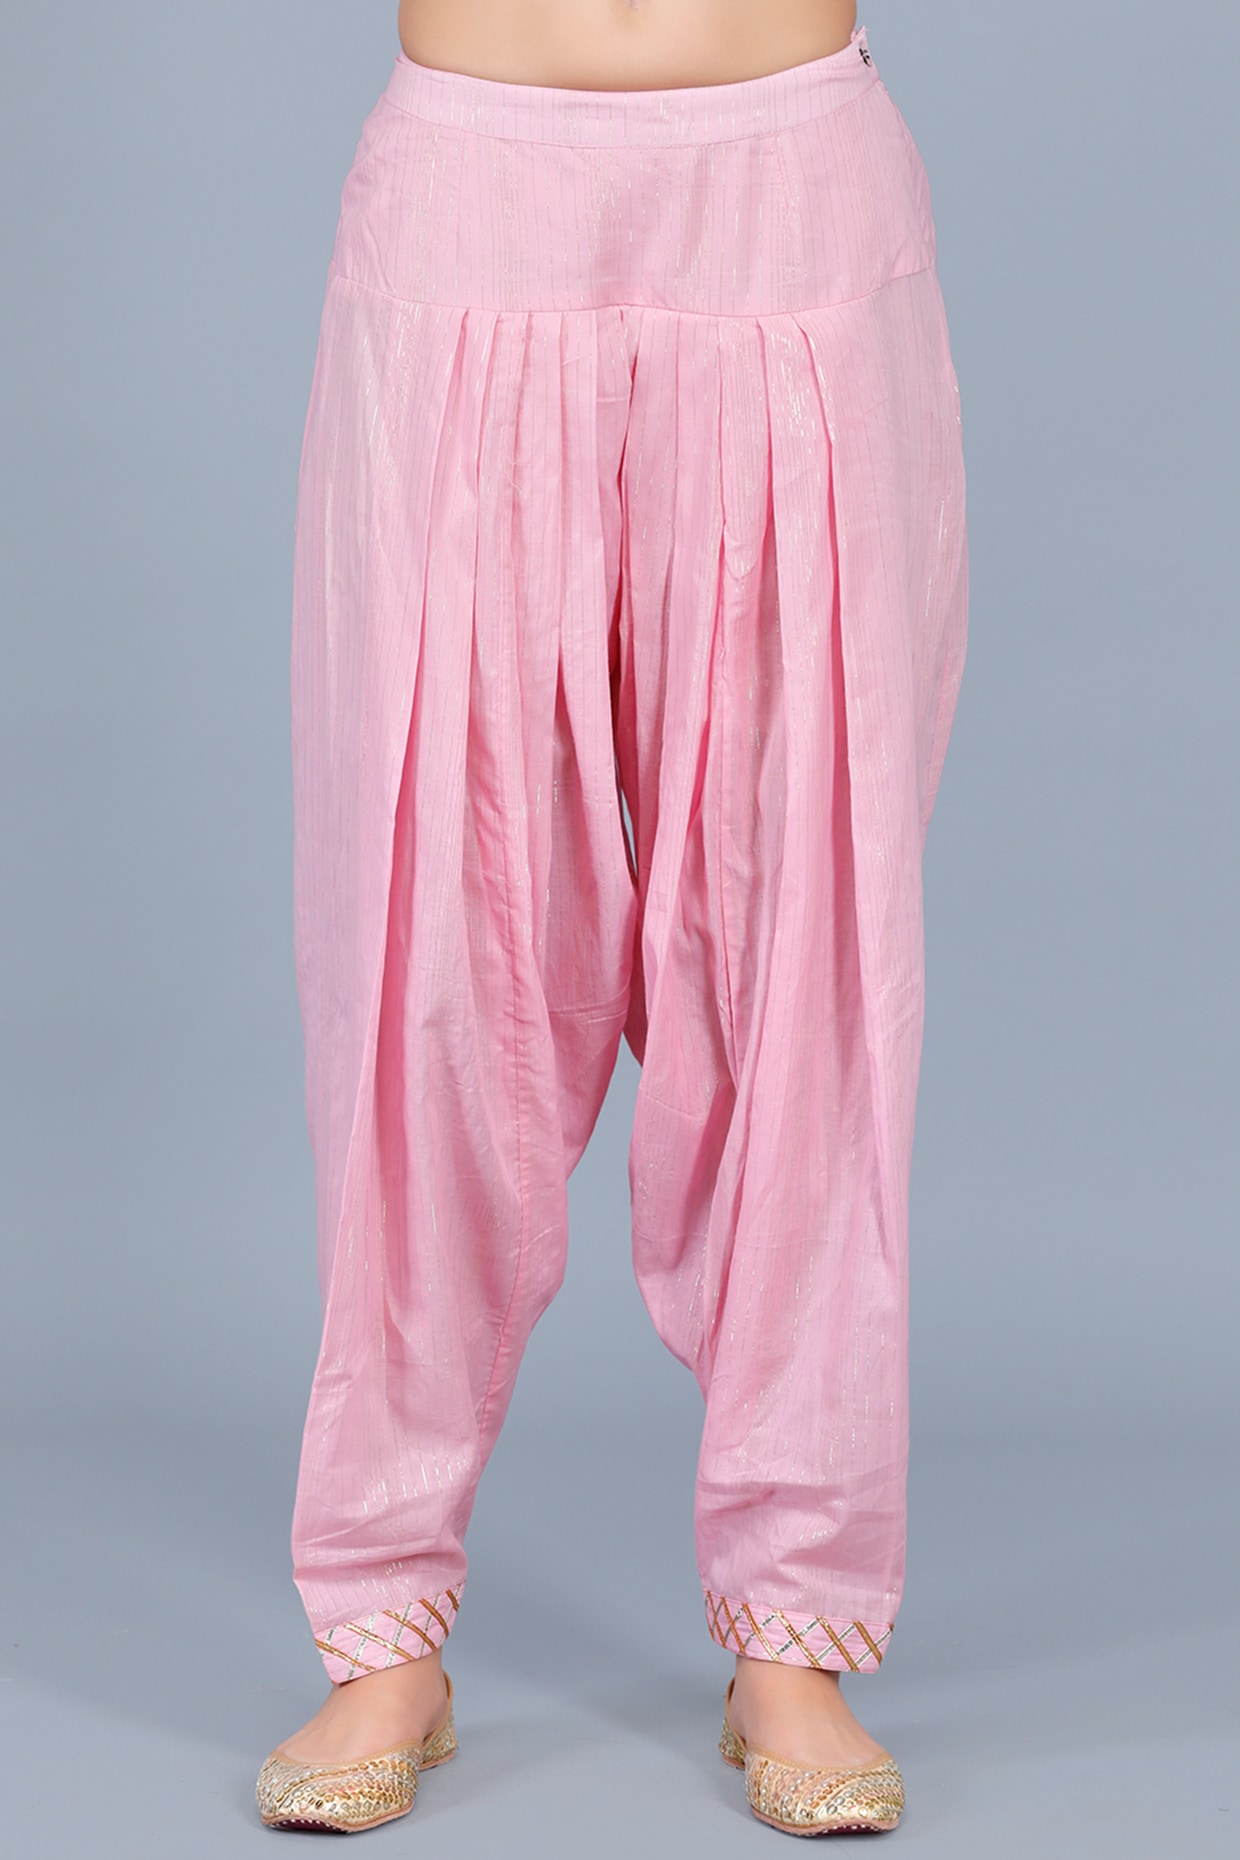 Buy Plus Size Cotton Salwar Pants & Plus Size Pink Salwar Pants - Apella